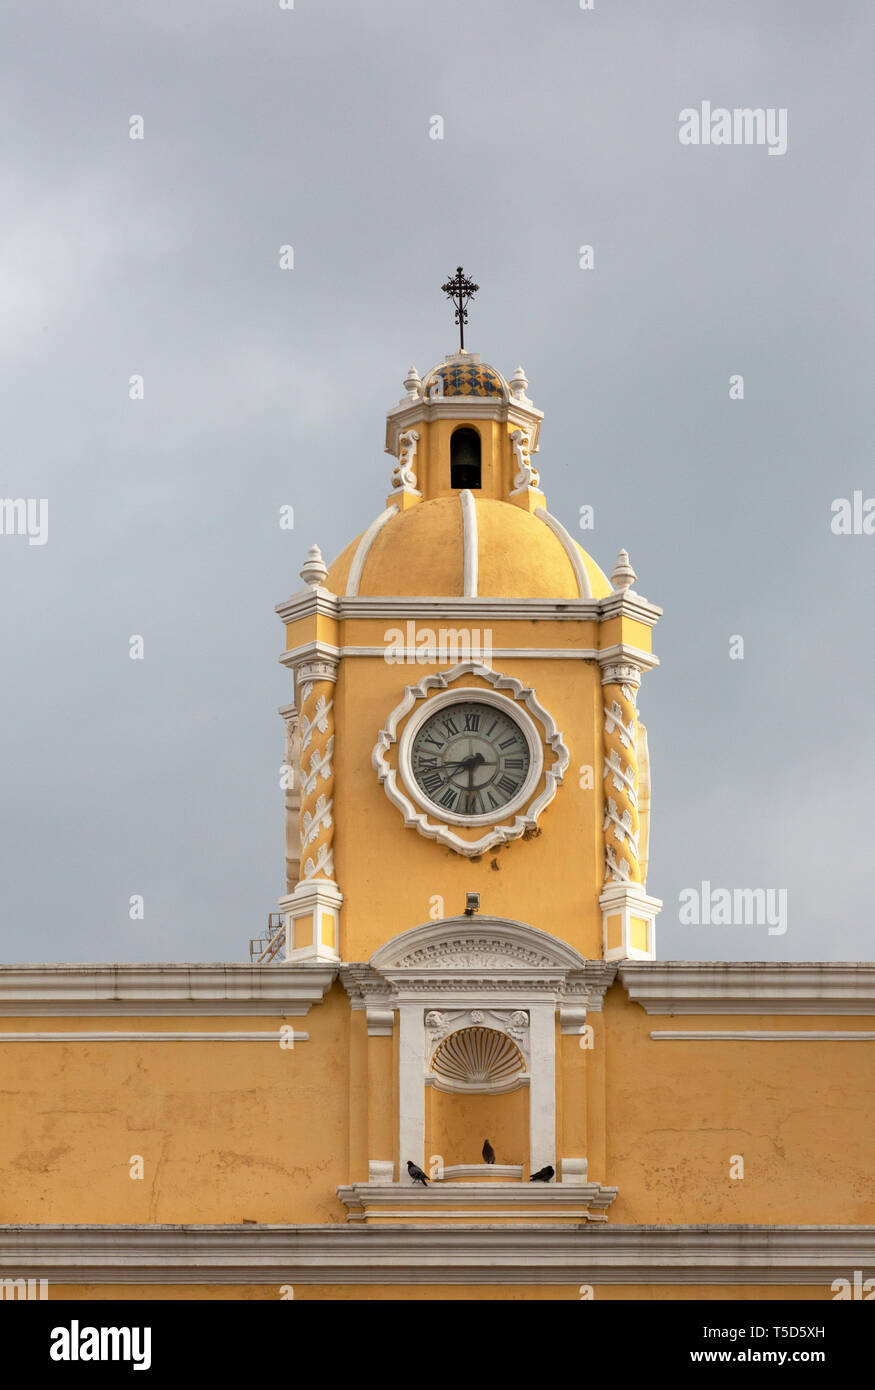 In der Nähe des Clock Tower, El Arco de Santa Catalina Santa Catlina (Arch), Antigua, Guatemala Mittelamerika Stockfoto